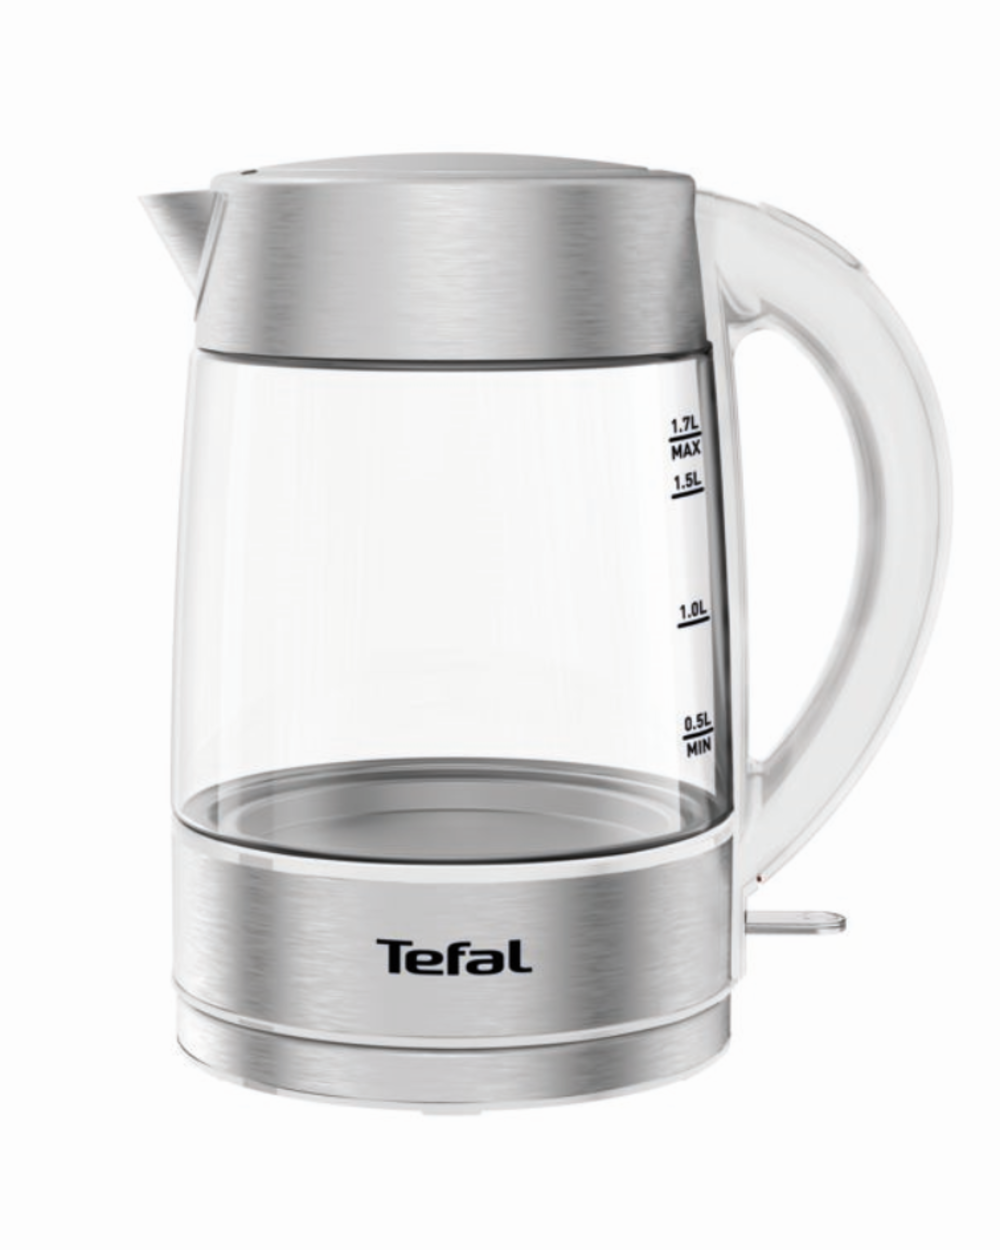 Чайник электрический Tefal KI772138 1.7 л прозрачный, белый чайник электрический tefal ki772138 1 7 л прозрачный белый